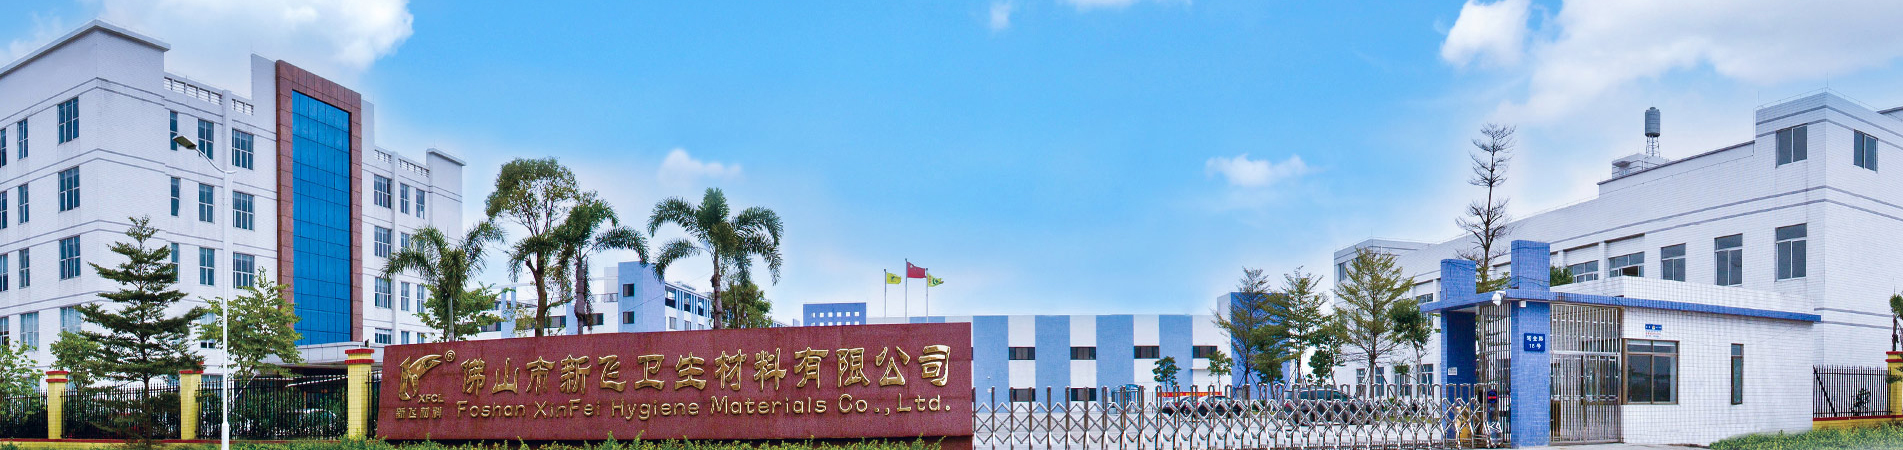 sanitary pad raw material factory